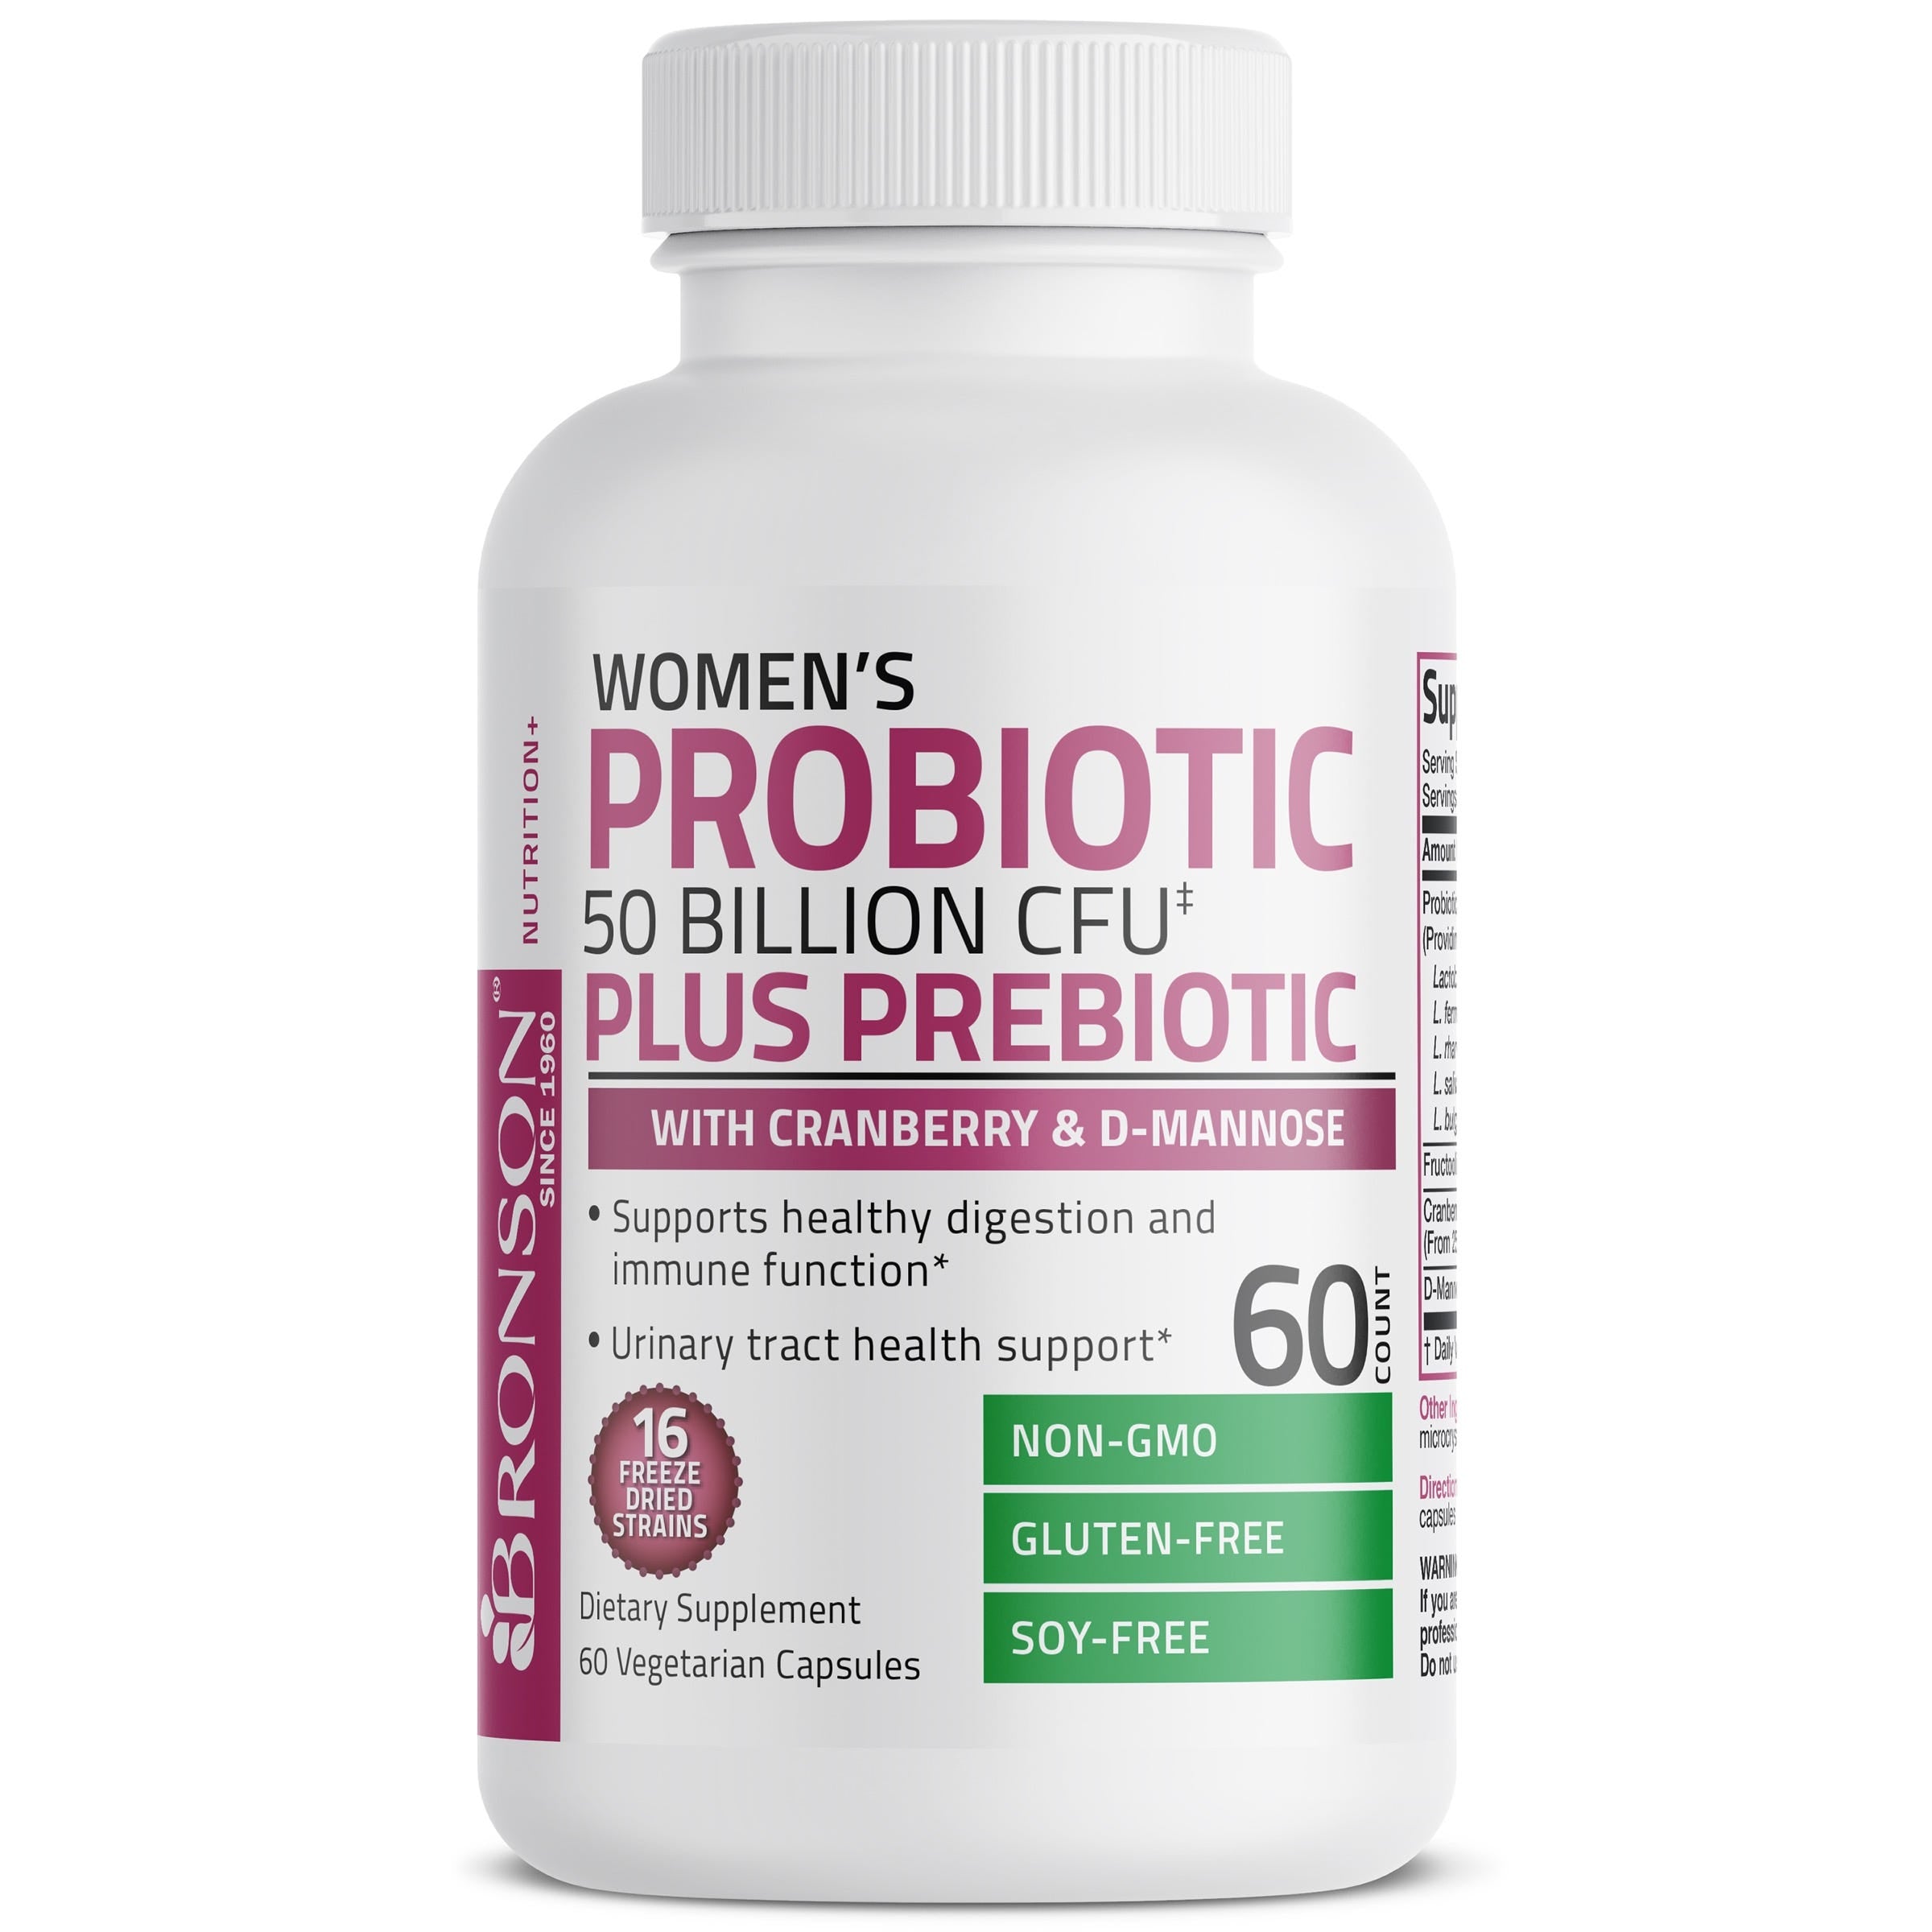 Probiotic Plus Prebiotic For Women - 50 Billion CFU - 60 Vegetarian Capsules view 4 of 7